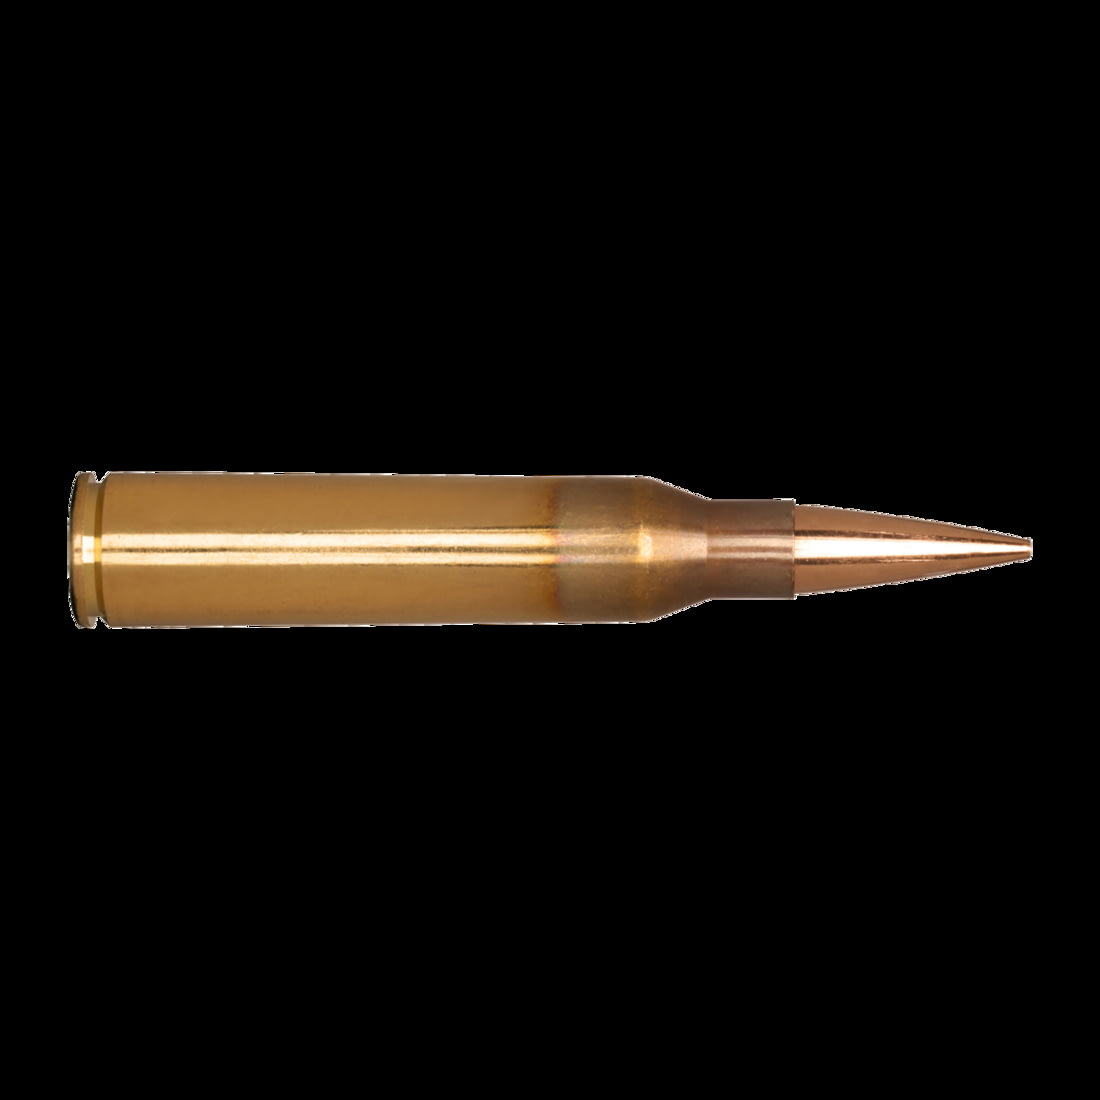 Berger Elite Hunter .338 Lapua Magnum 300 grain Elite Hunter Brass Cased Centerfire Rifle Ammunition